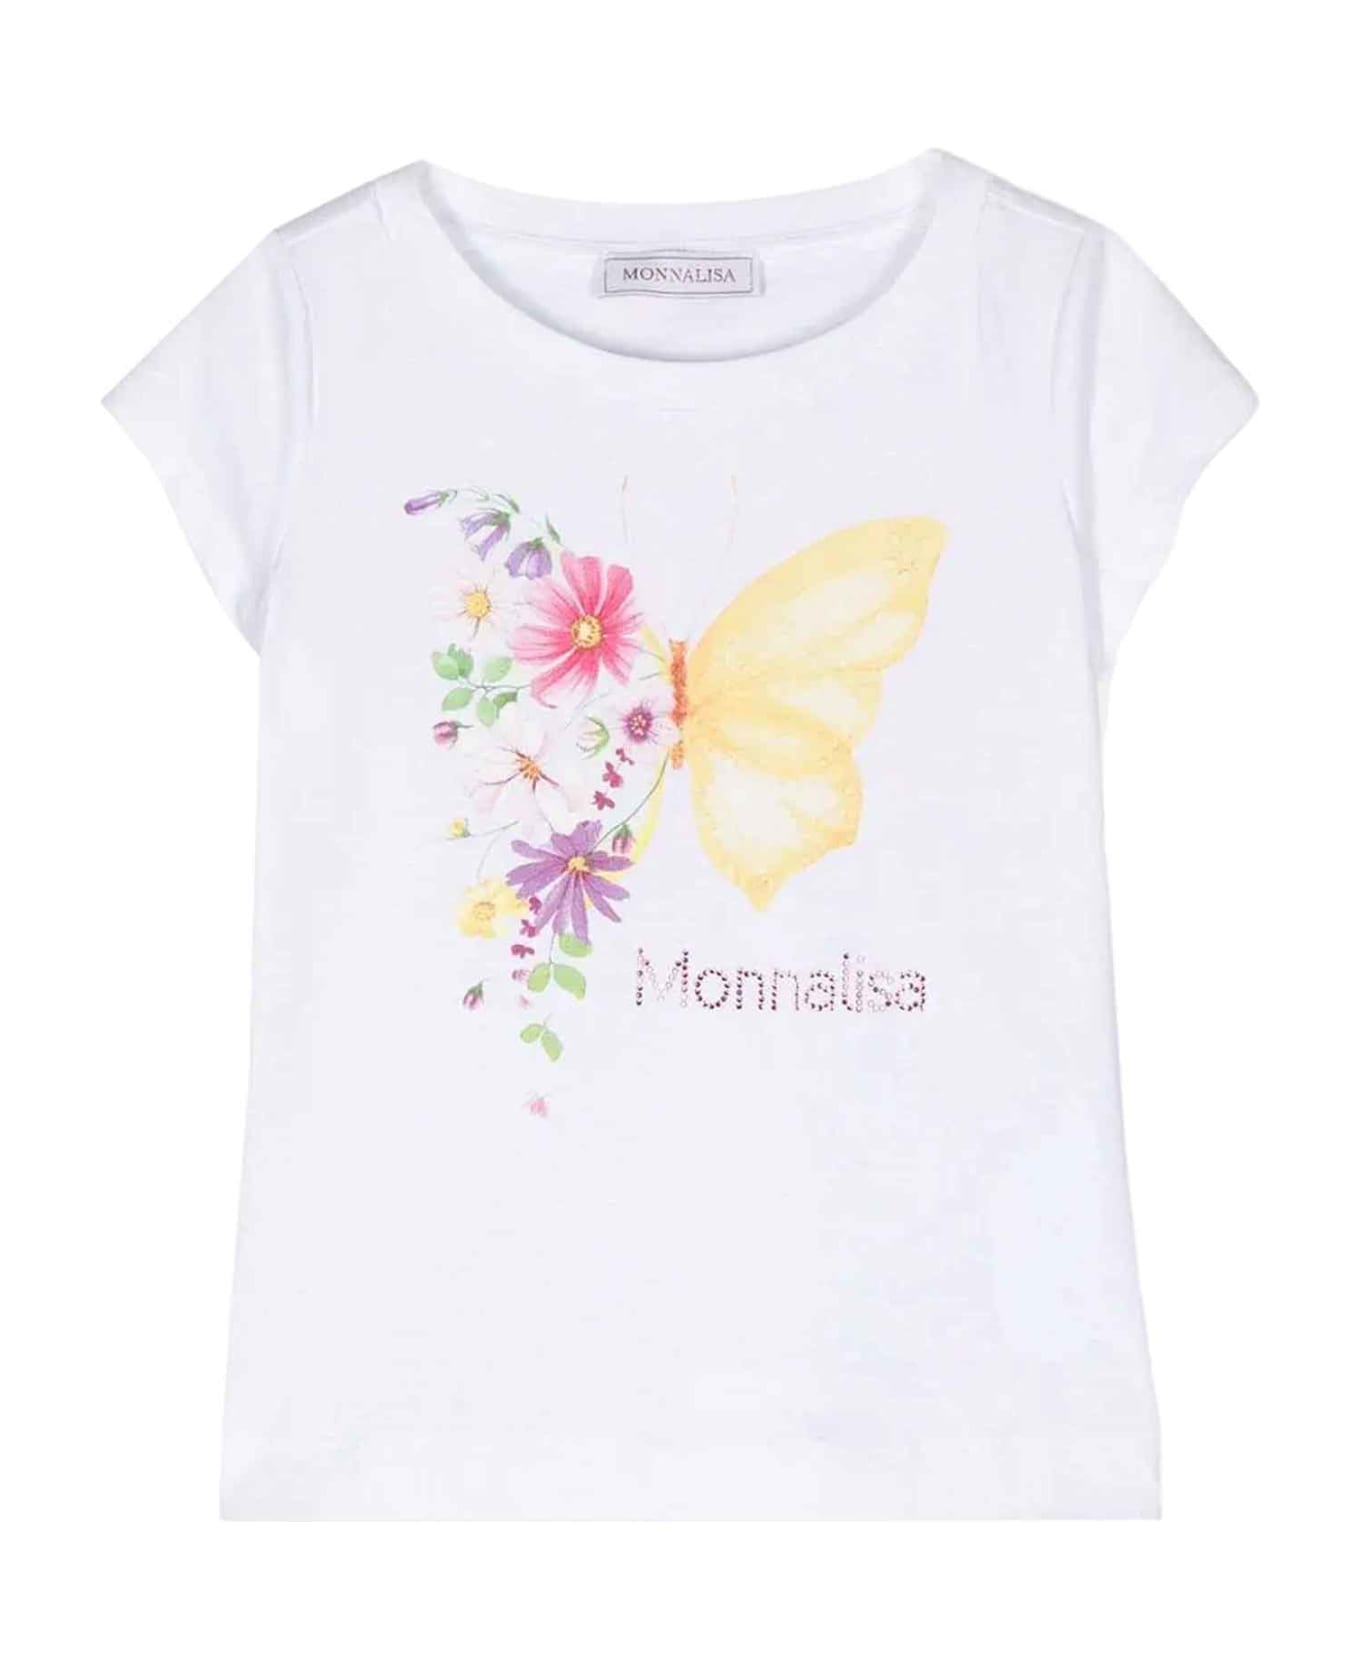 Monnalisa White T-shirt Girl